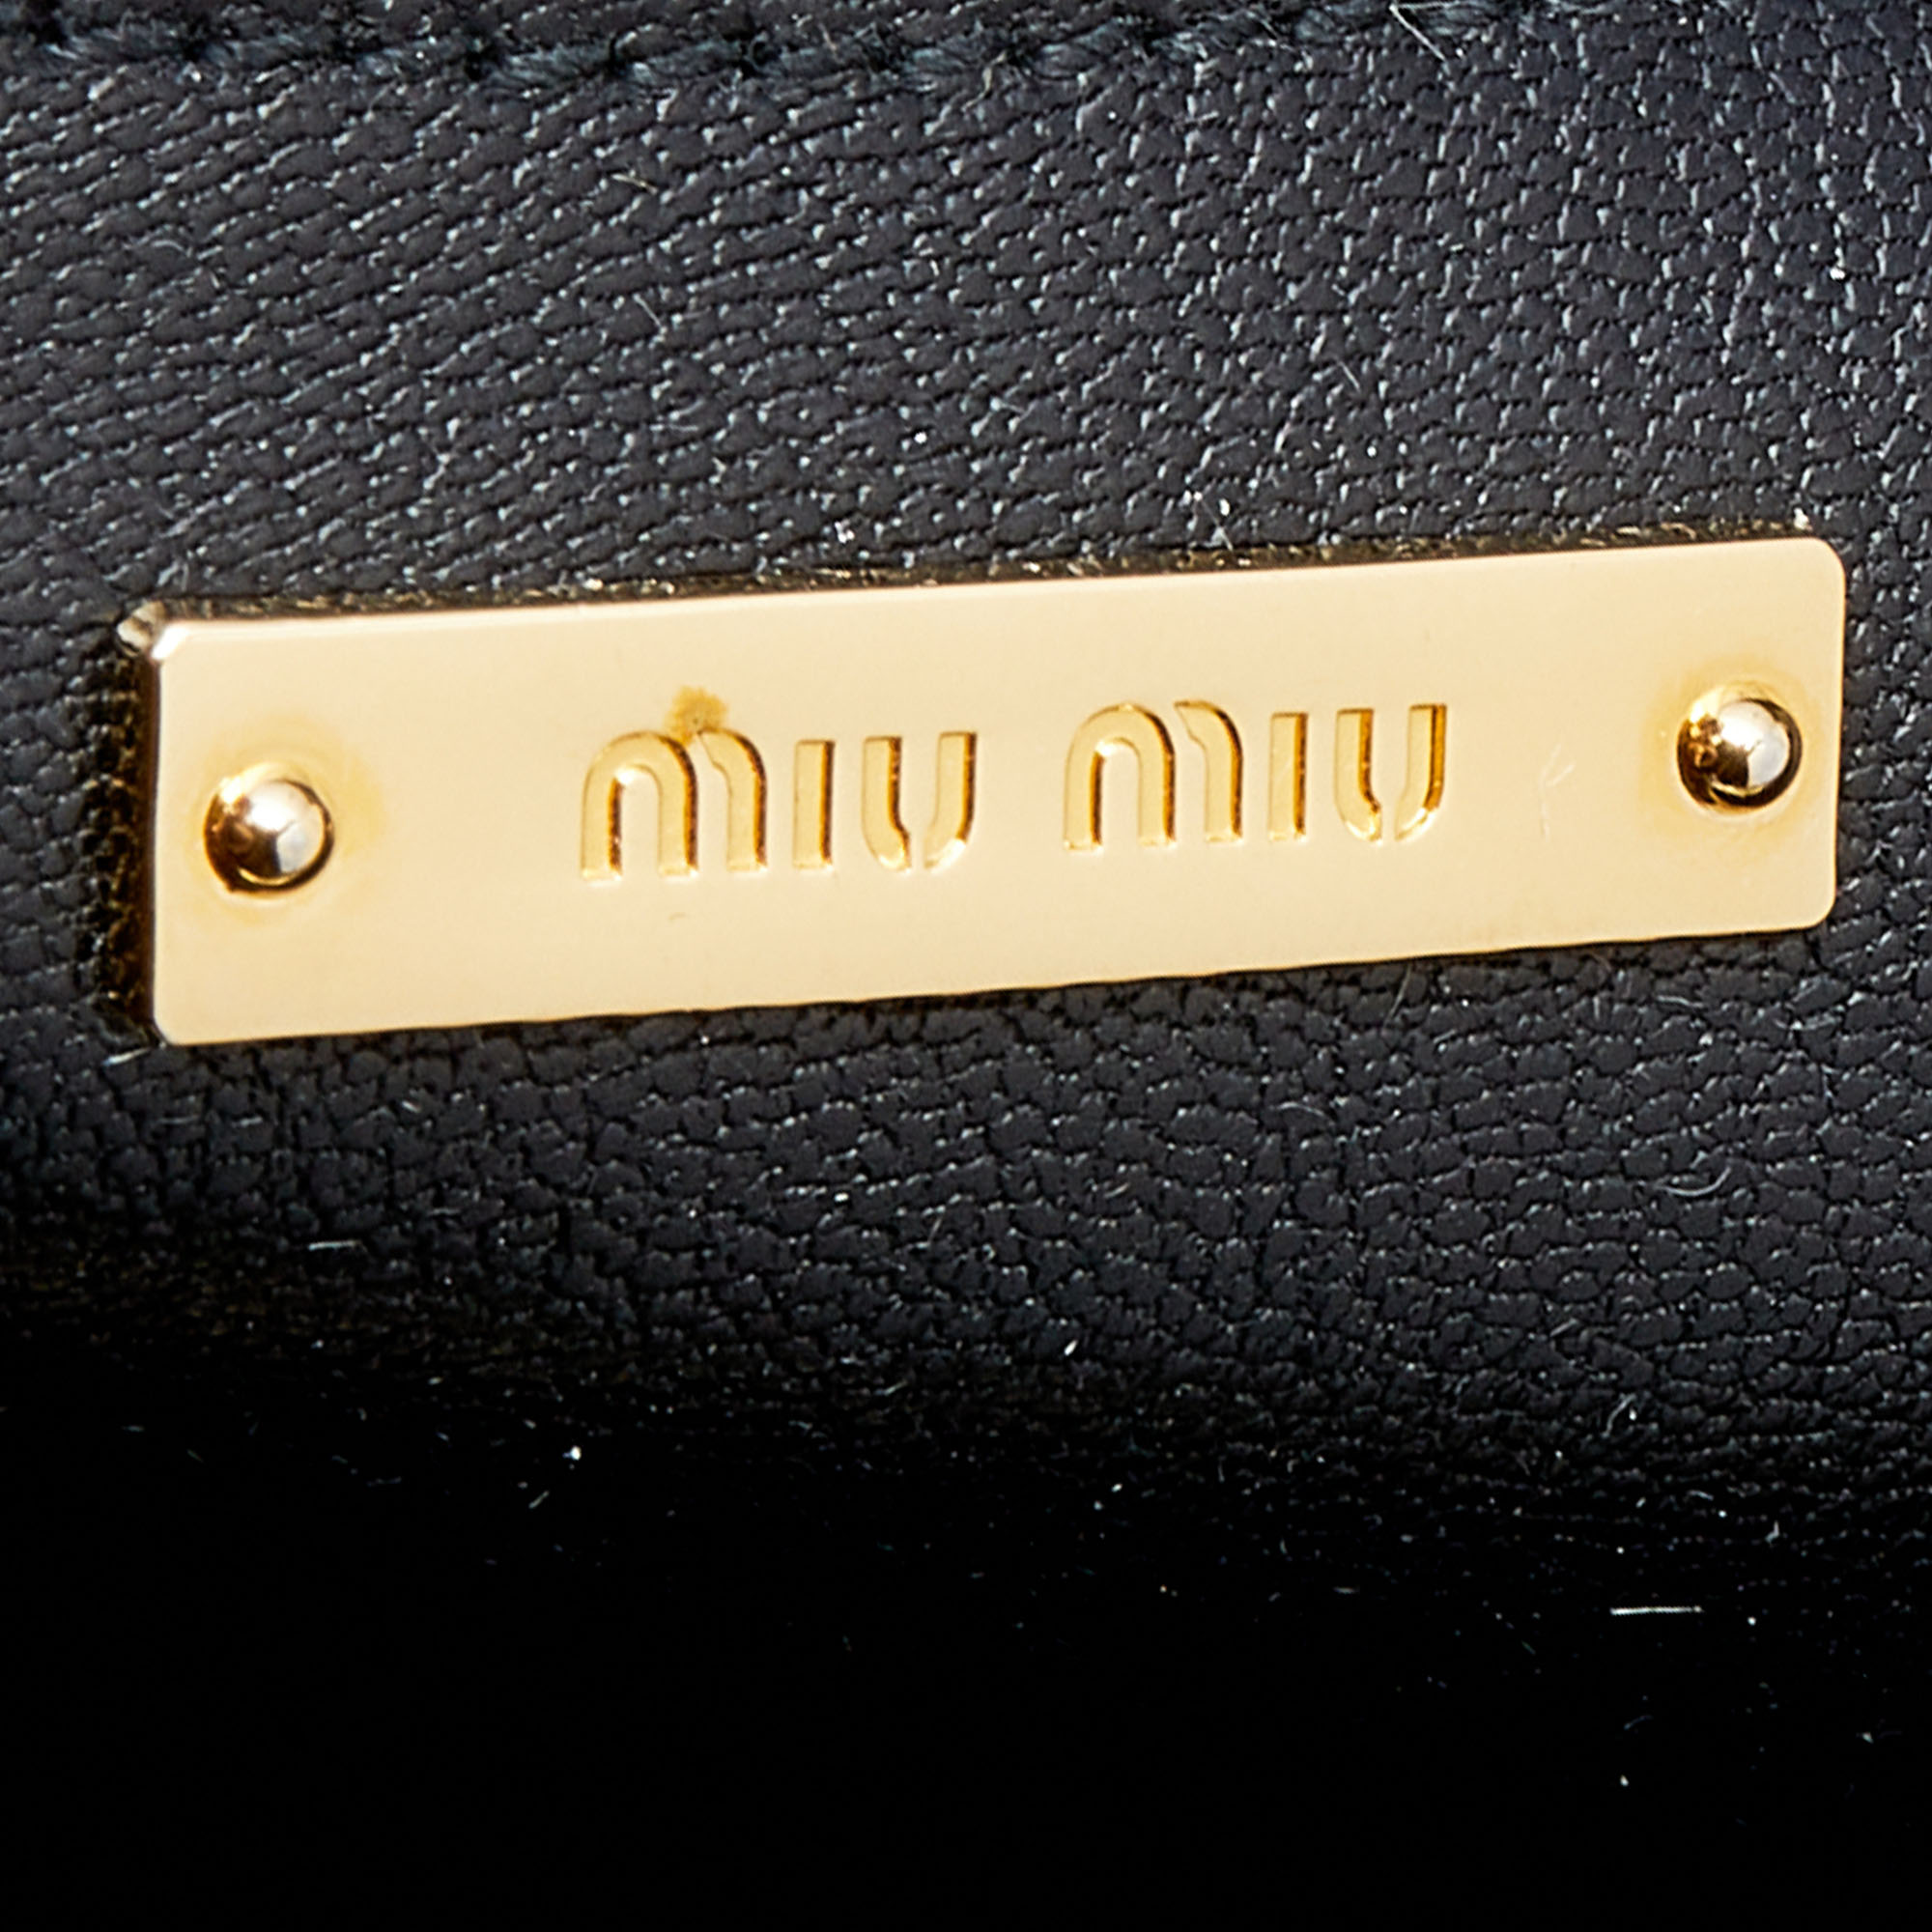 Miu Miu Black Vitello Soft Leather Large Top Handle Bag